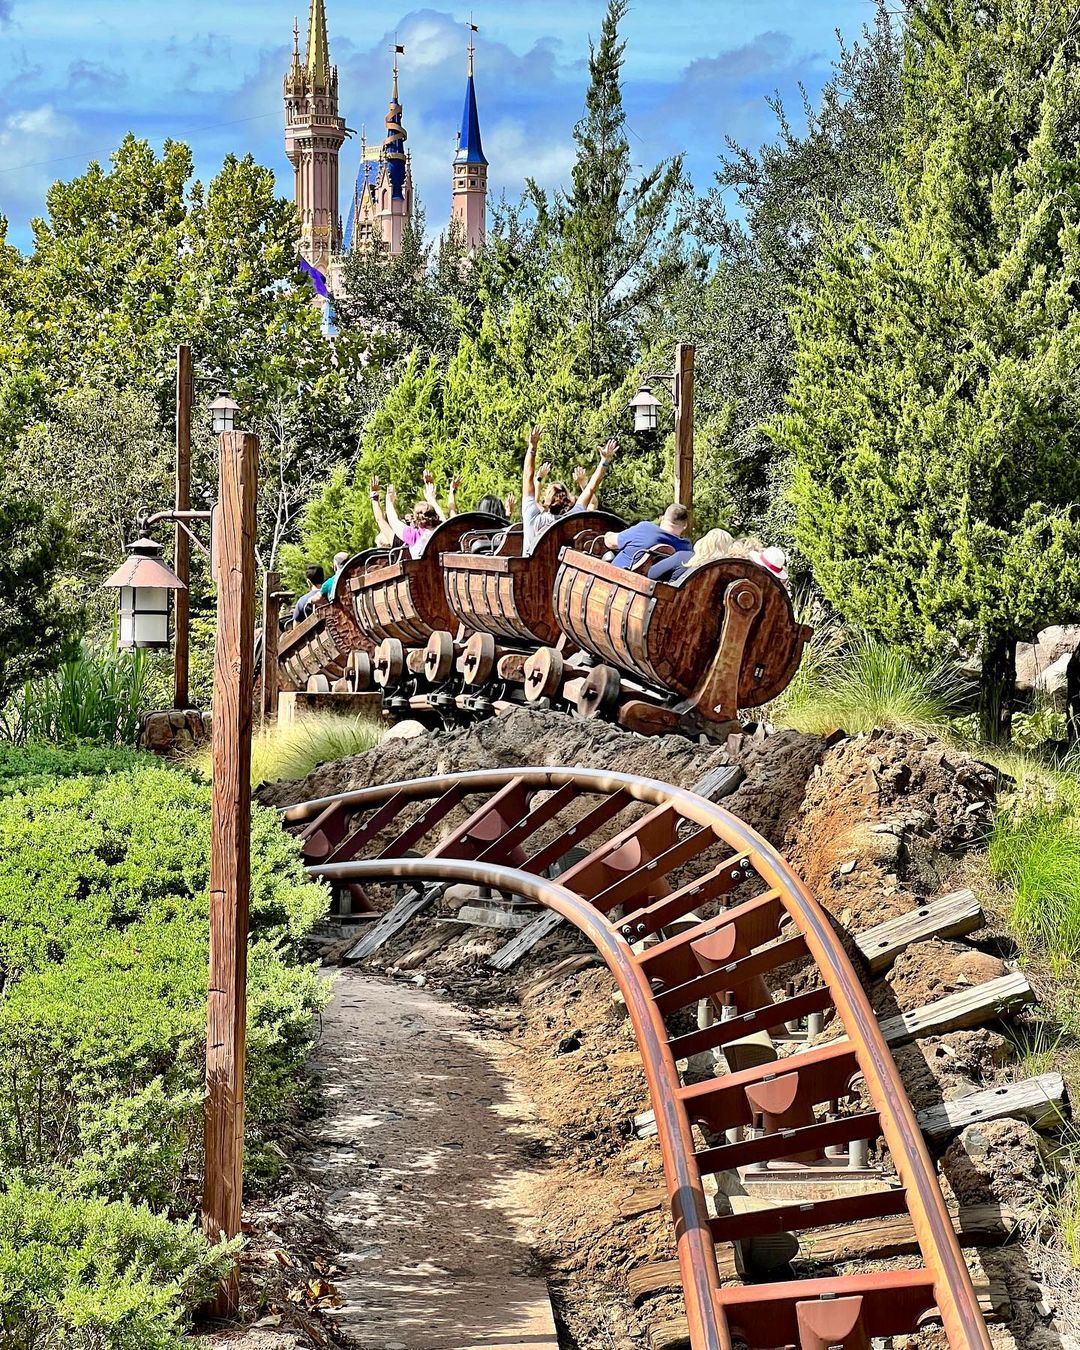 Seven Dwarfs Mine Train - Family Coaster at Magic Kingdom